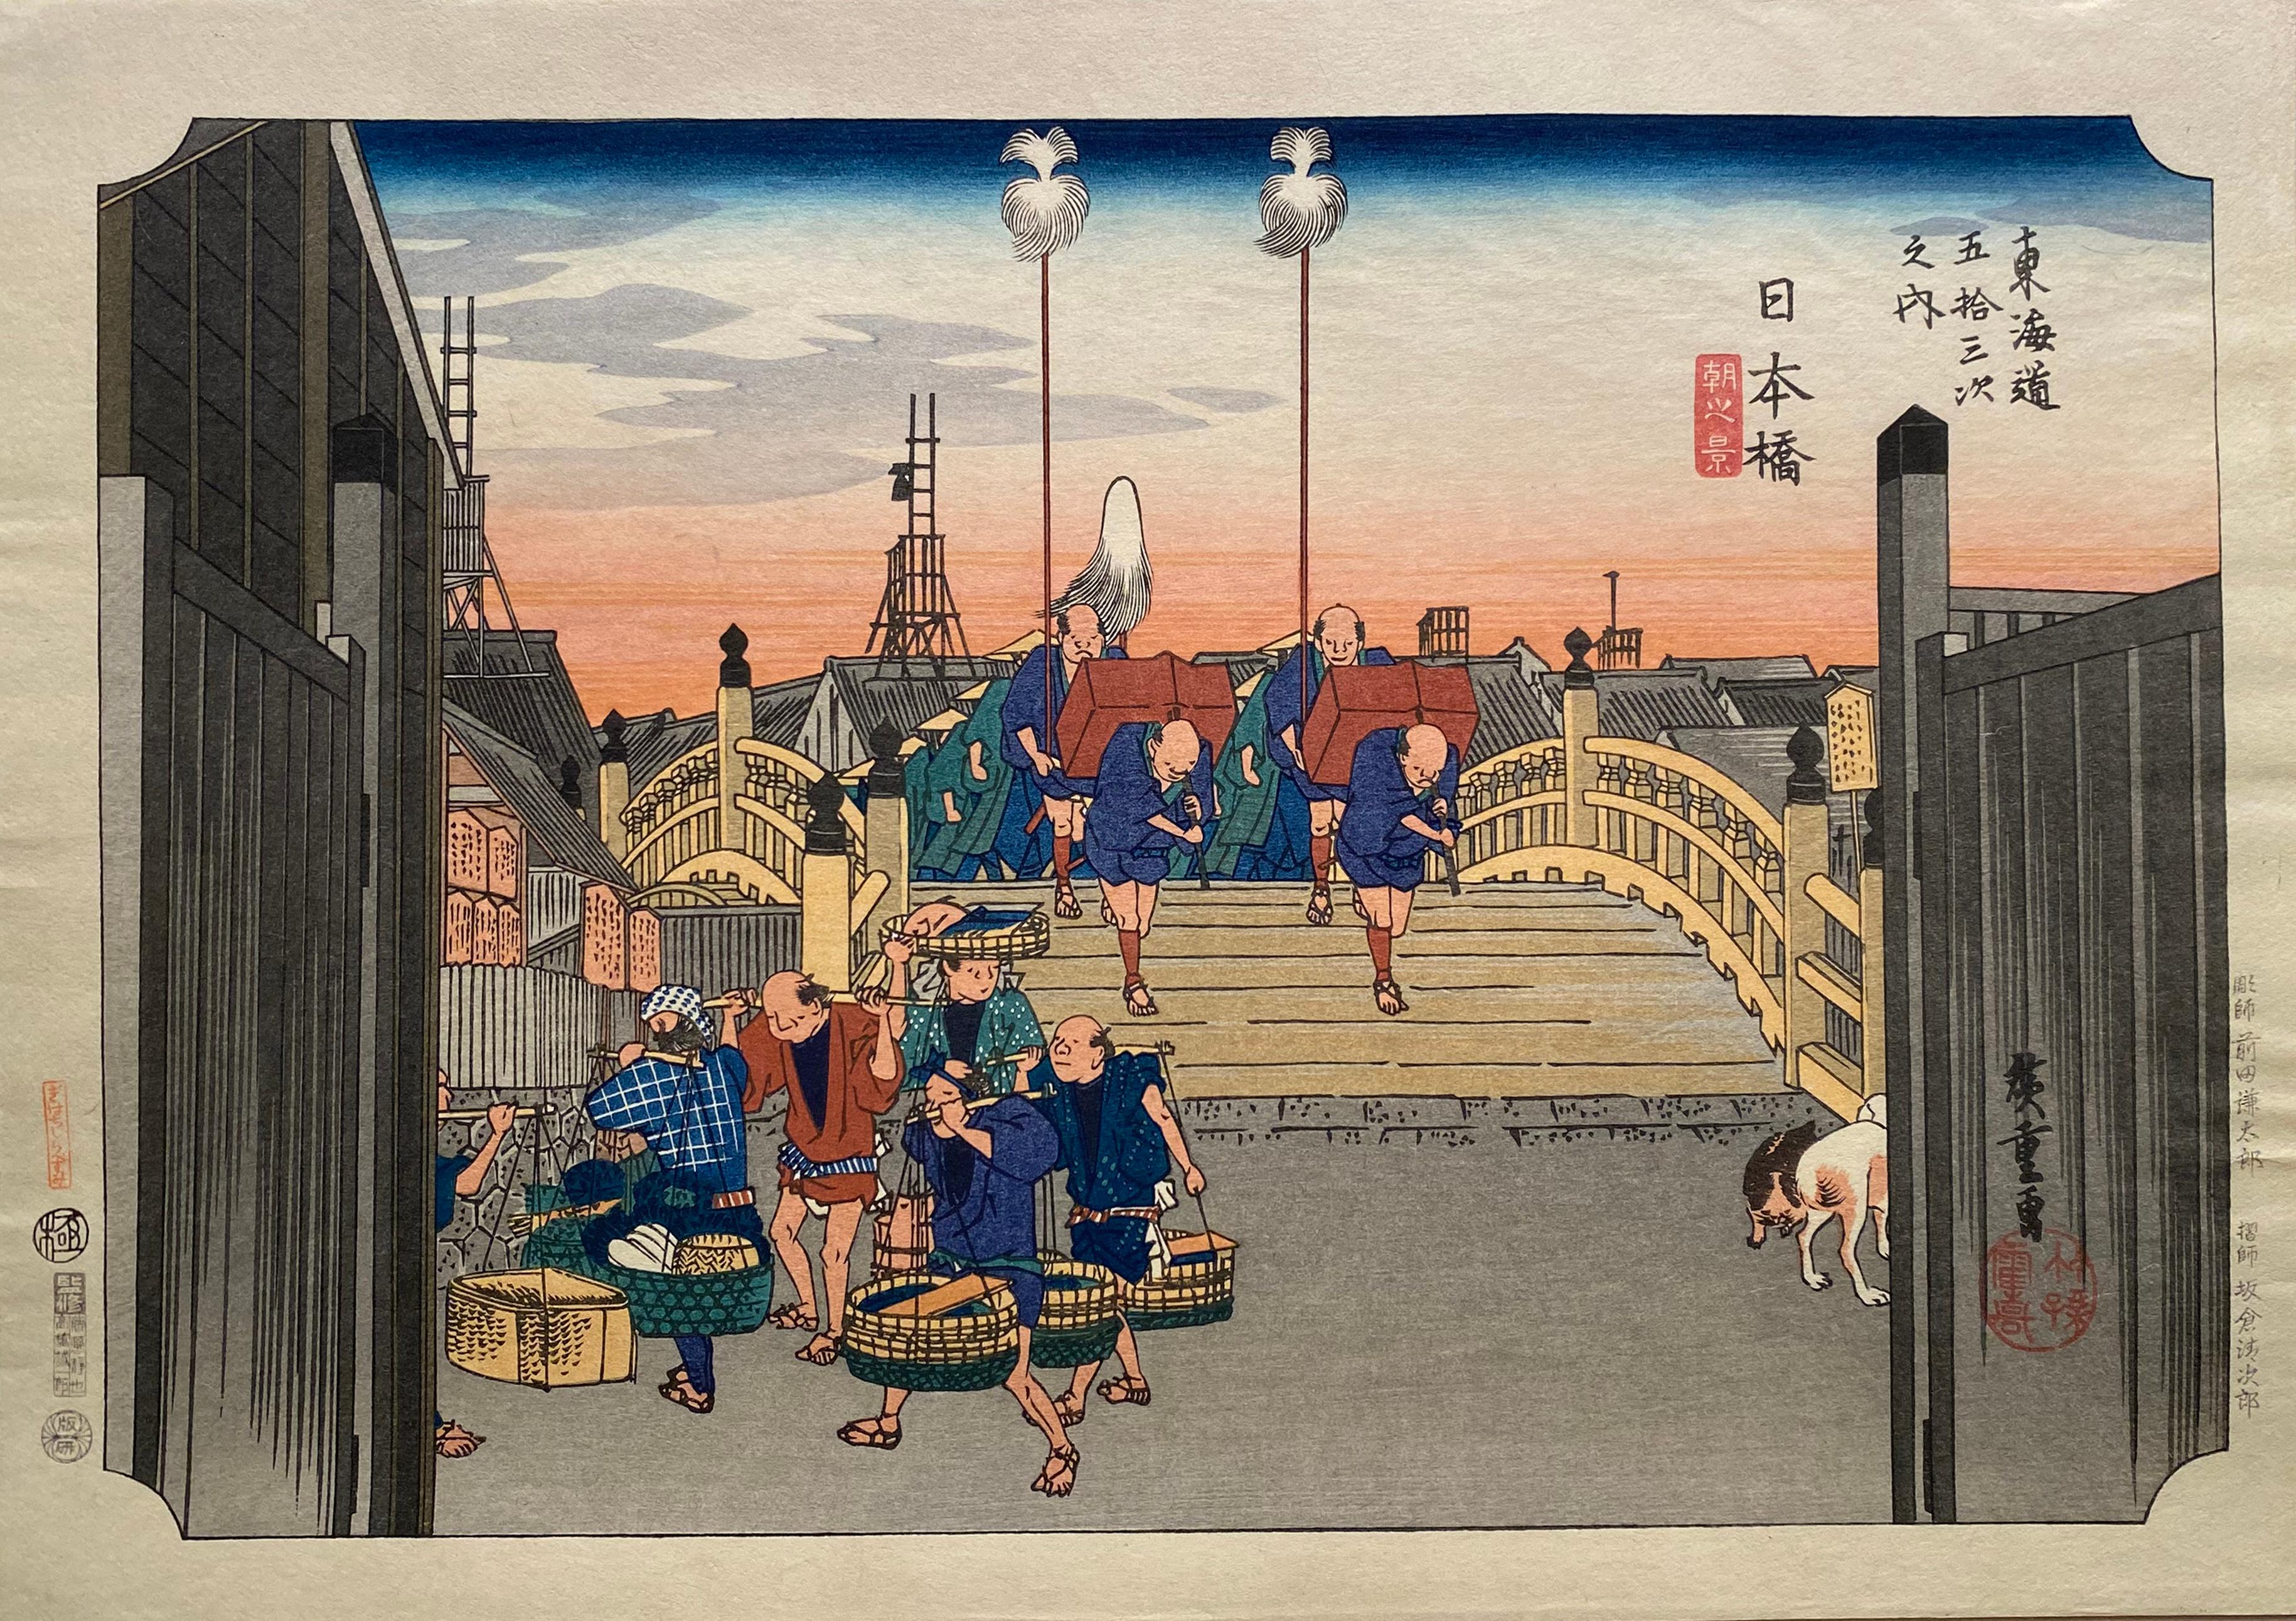 Utagawa Hiroshige (Ando Hiroshige) Landscape Print – Nihon-Bashi Station", nach Utagawa Hiroshige 歌川廣重, Ukiyo-e Holzschnitt, Tokaido